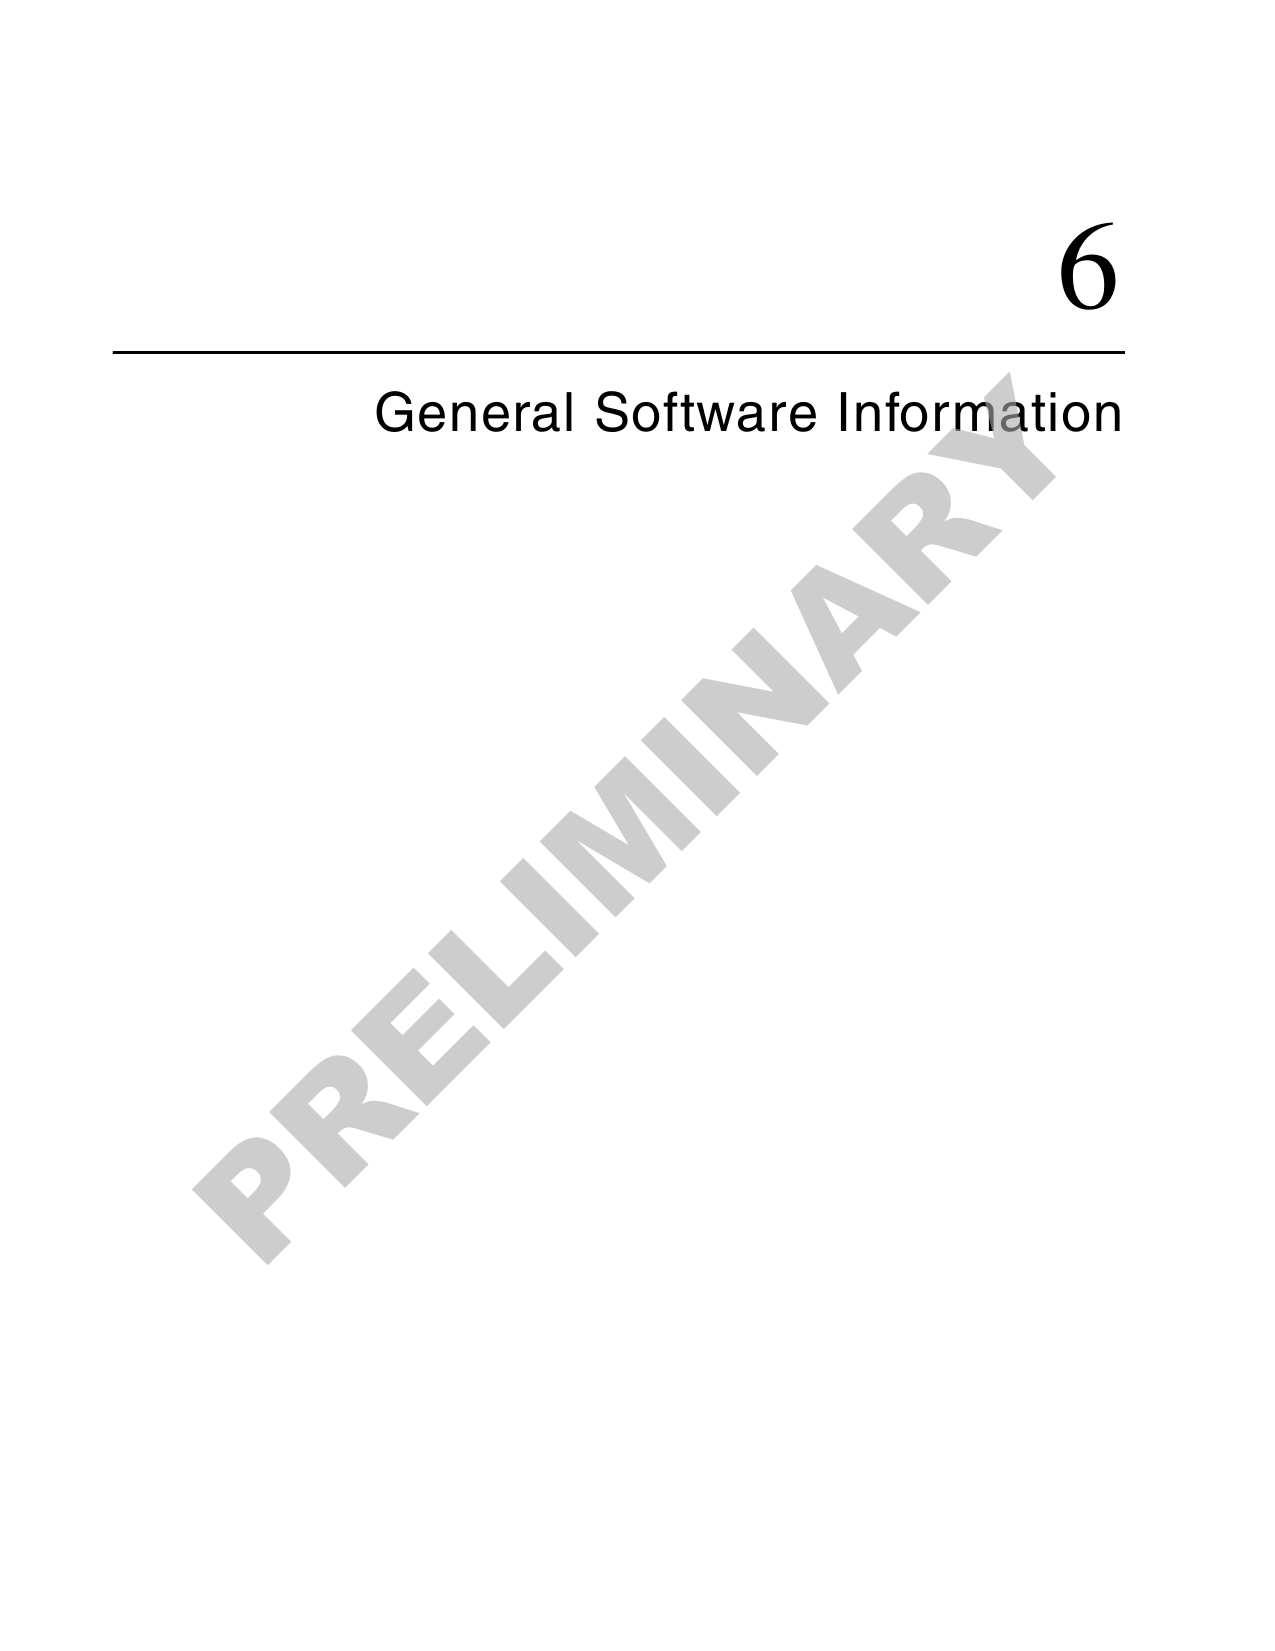 6General Software InformationPRELIMINARY